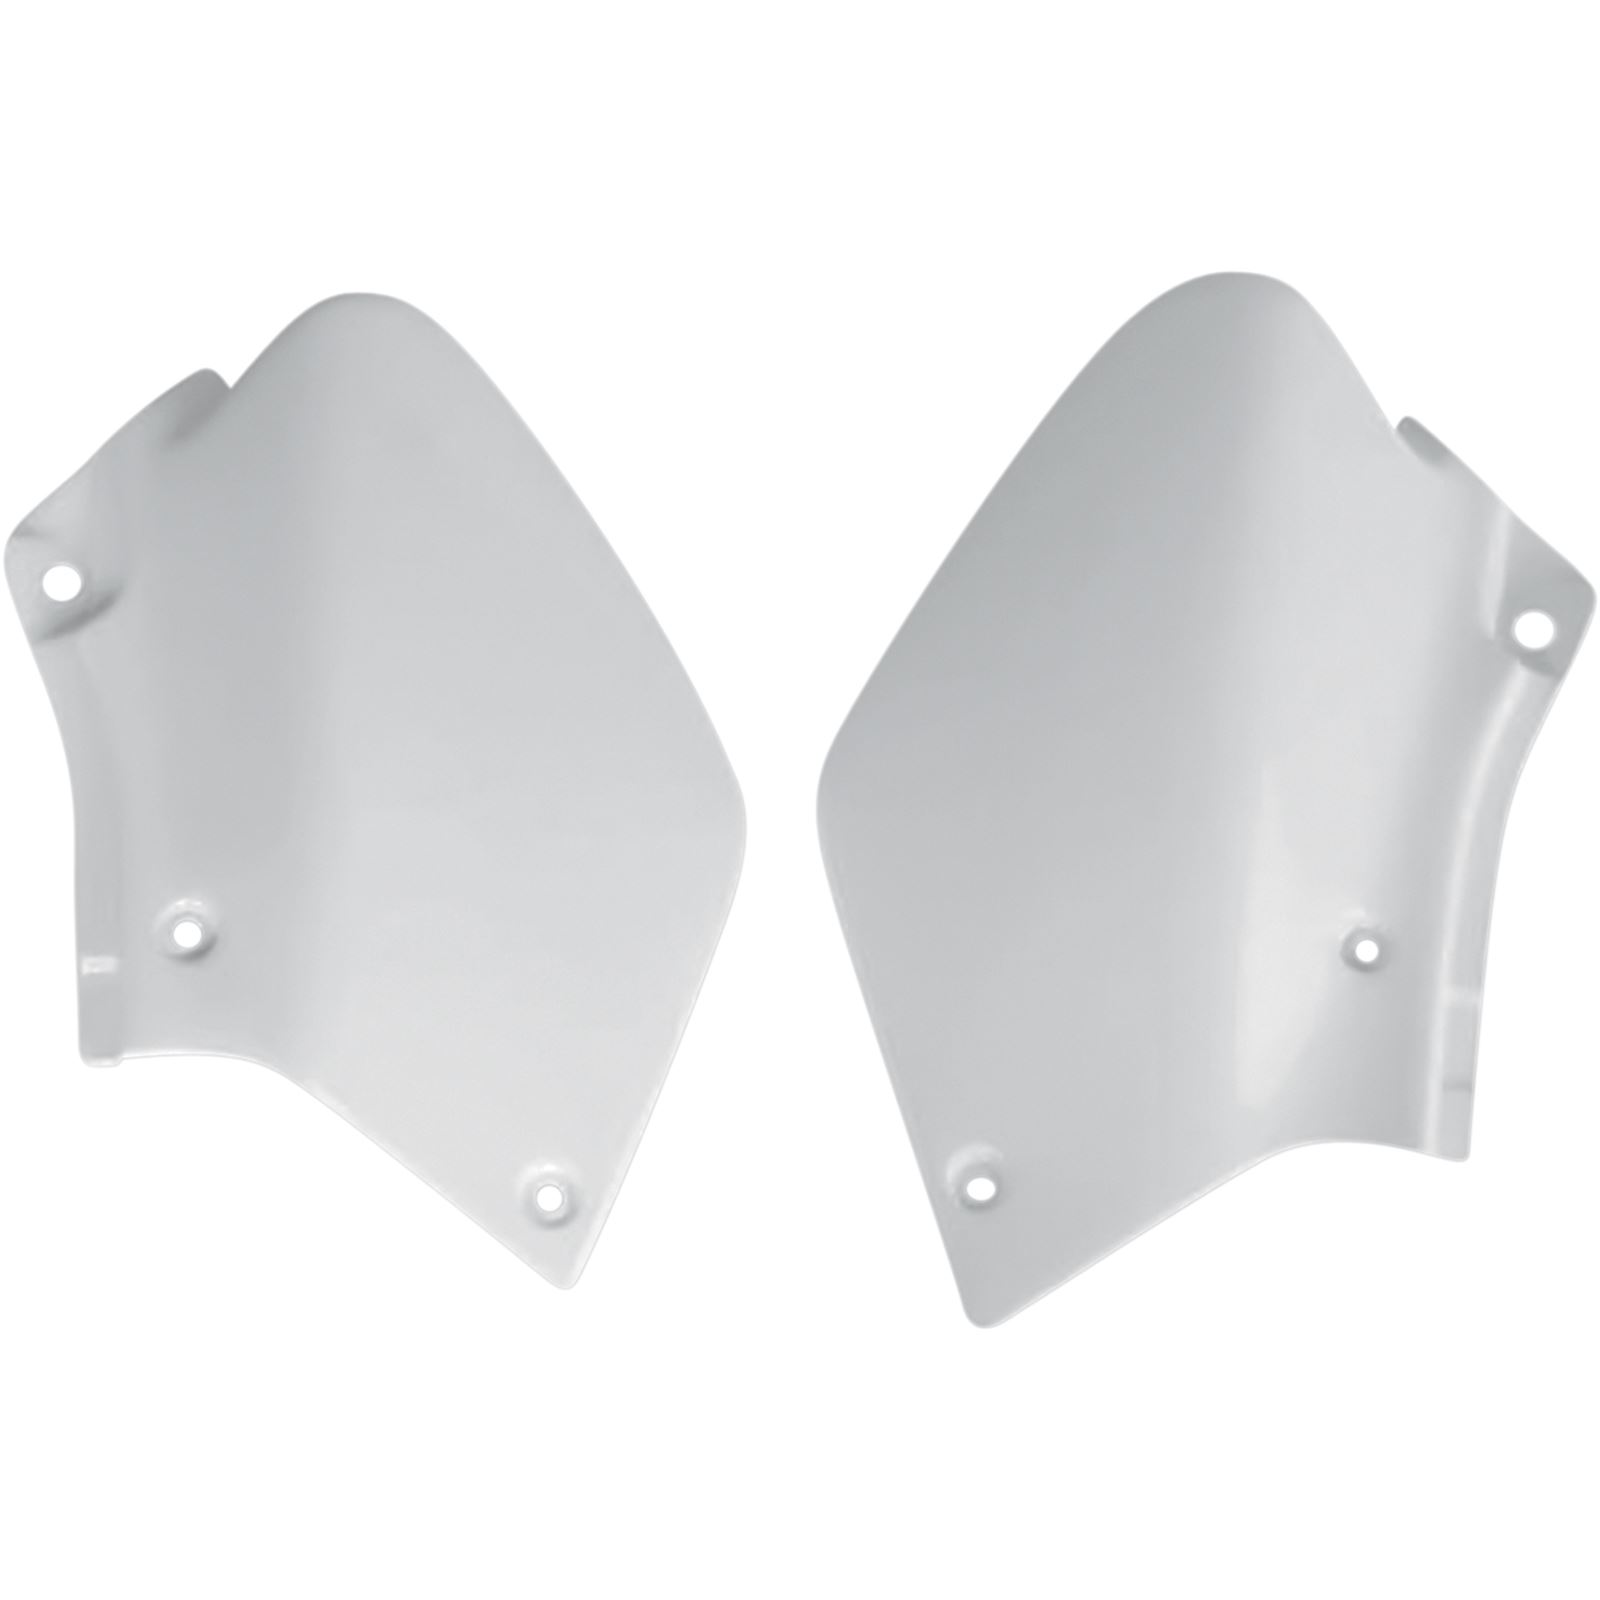 UFO Plastics Side Covers - XR400 '96-00 - White